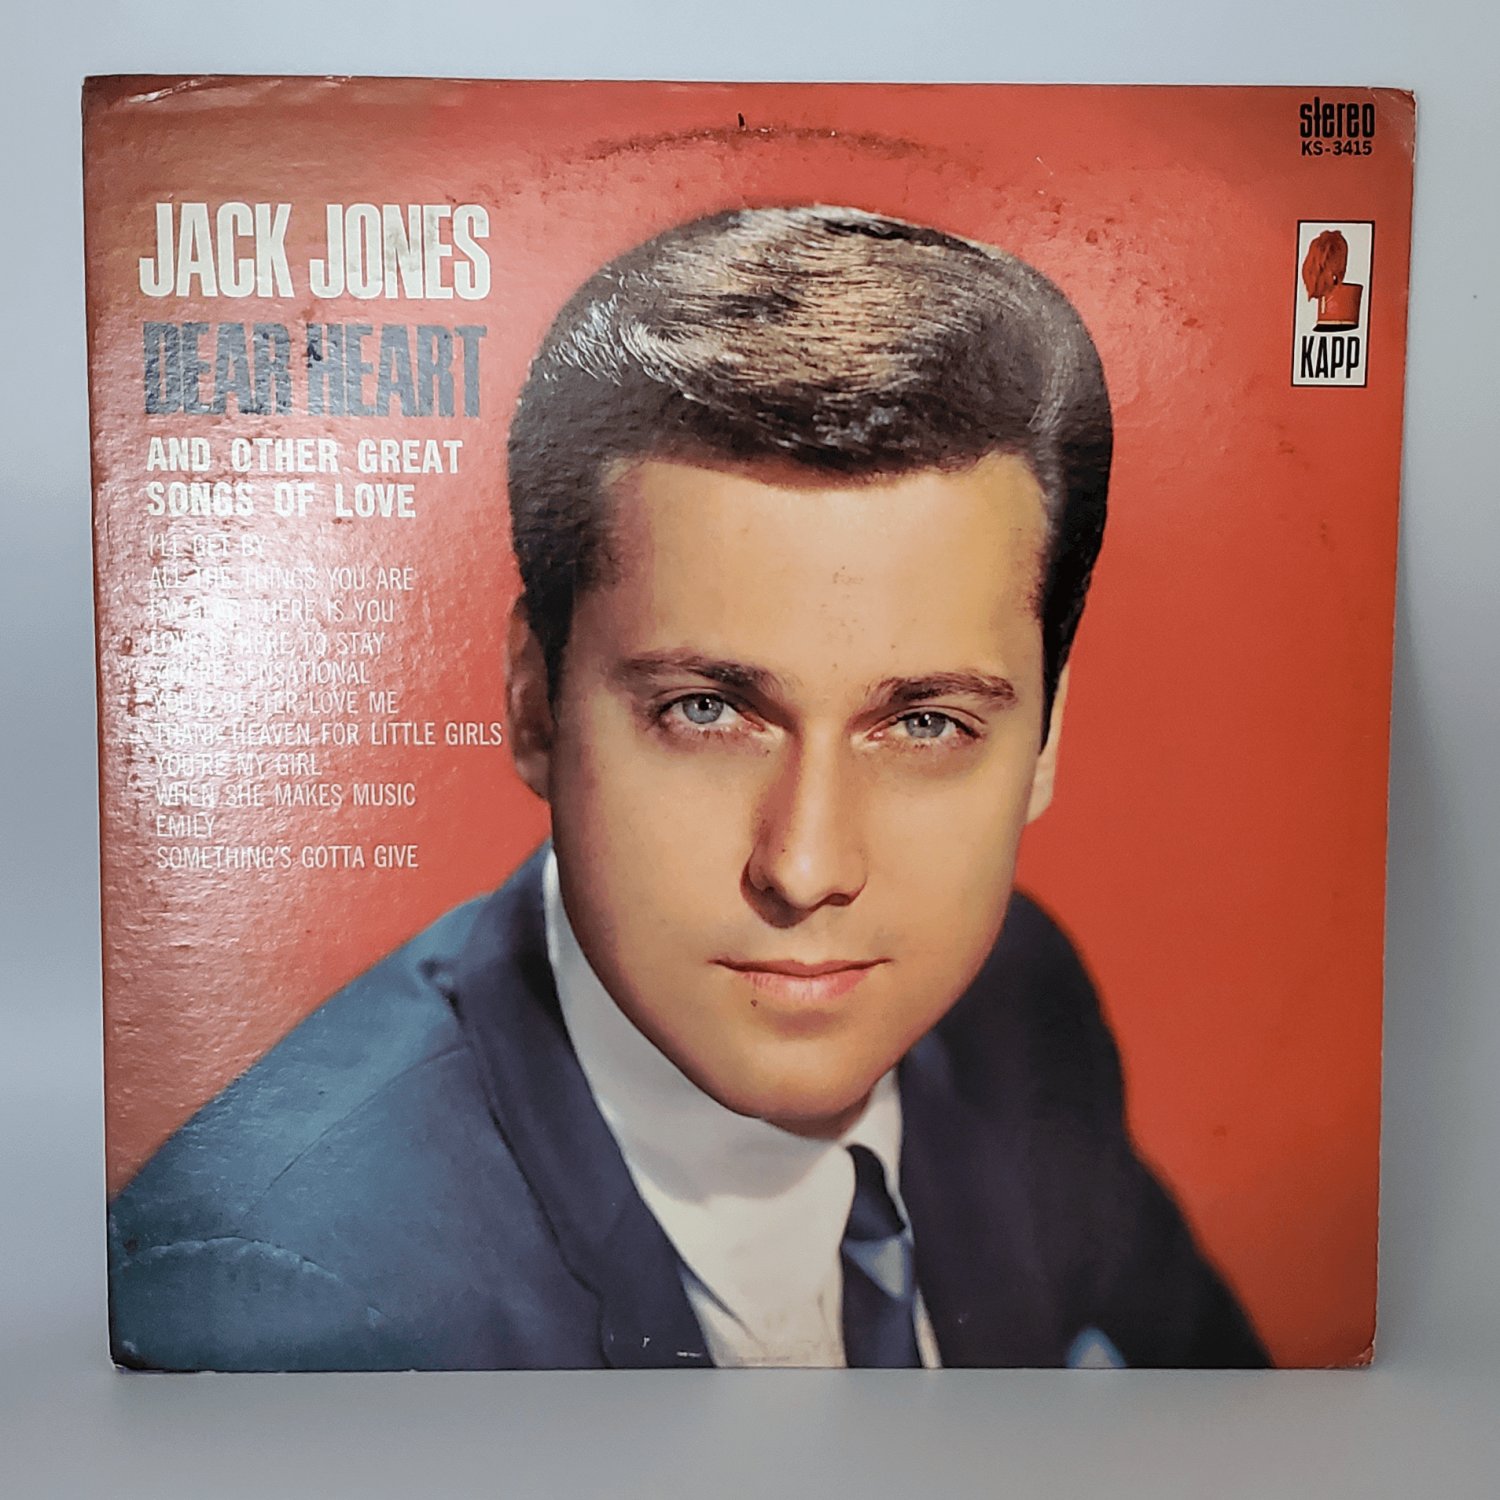 Jack Jones - Dear Heart (Stereo Vinyl Record KS-3415)